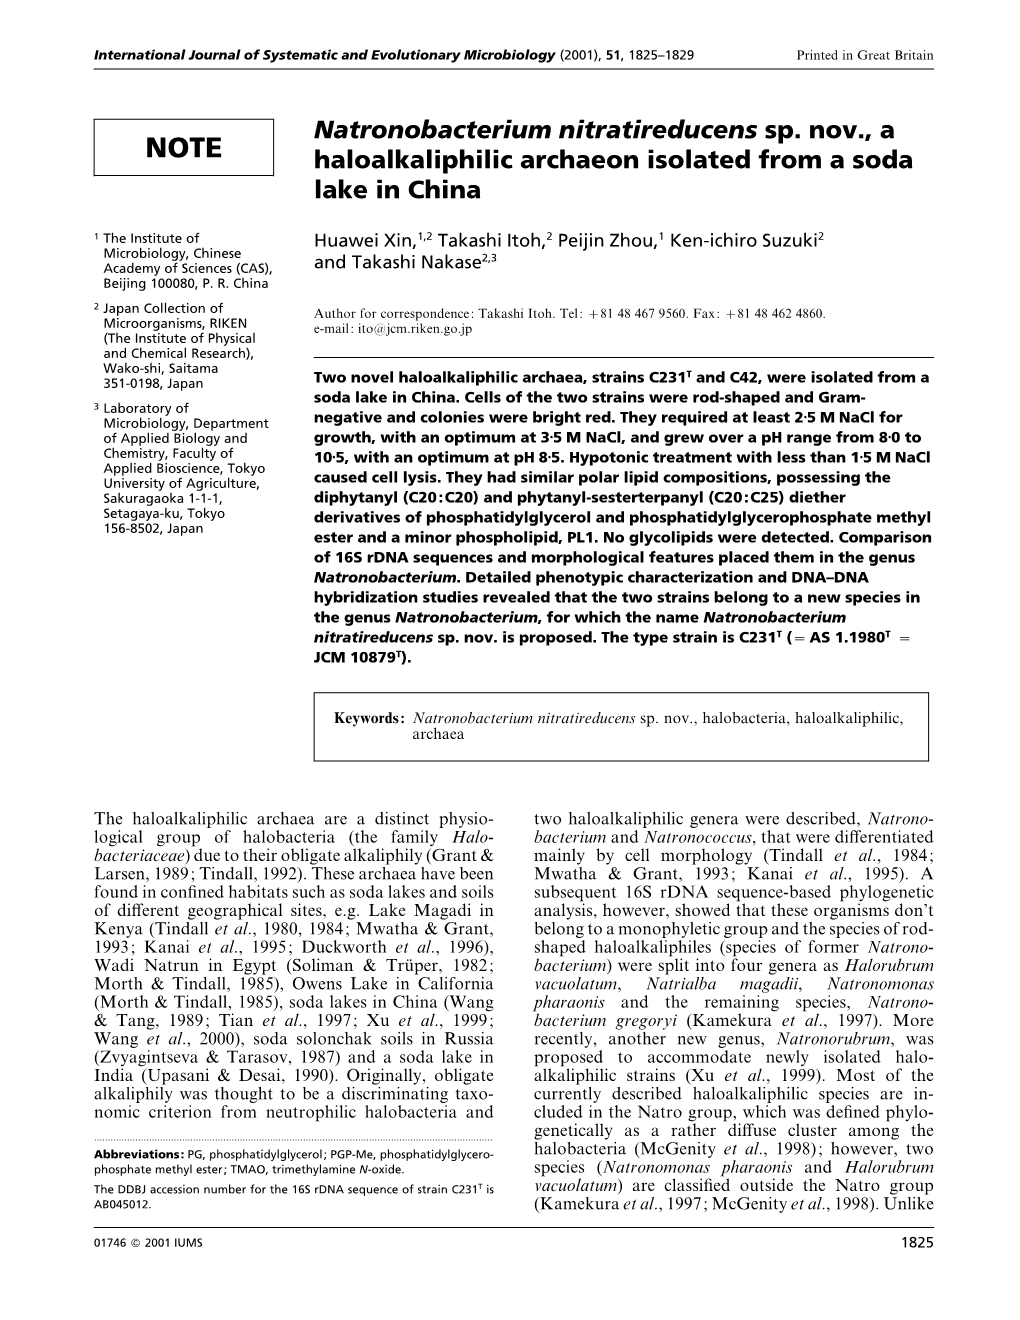 Natronobacterium Nitratireducens Sp. Nov., a Haloalkaliphilic Archaeon